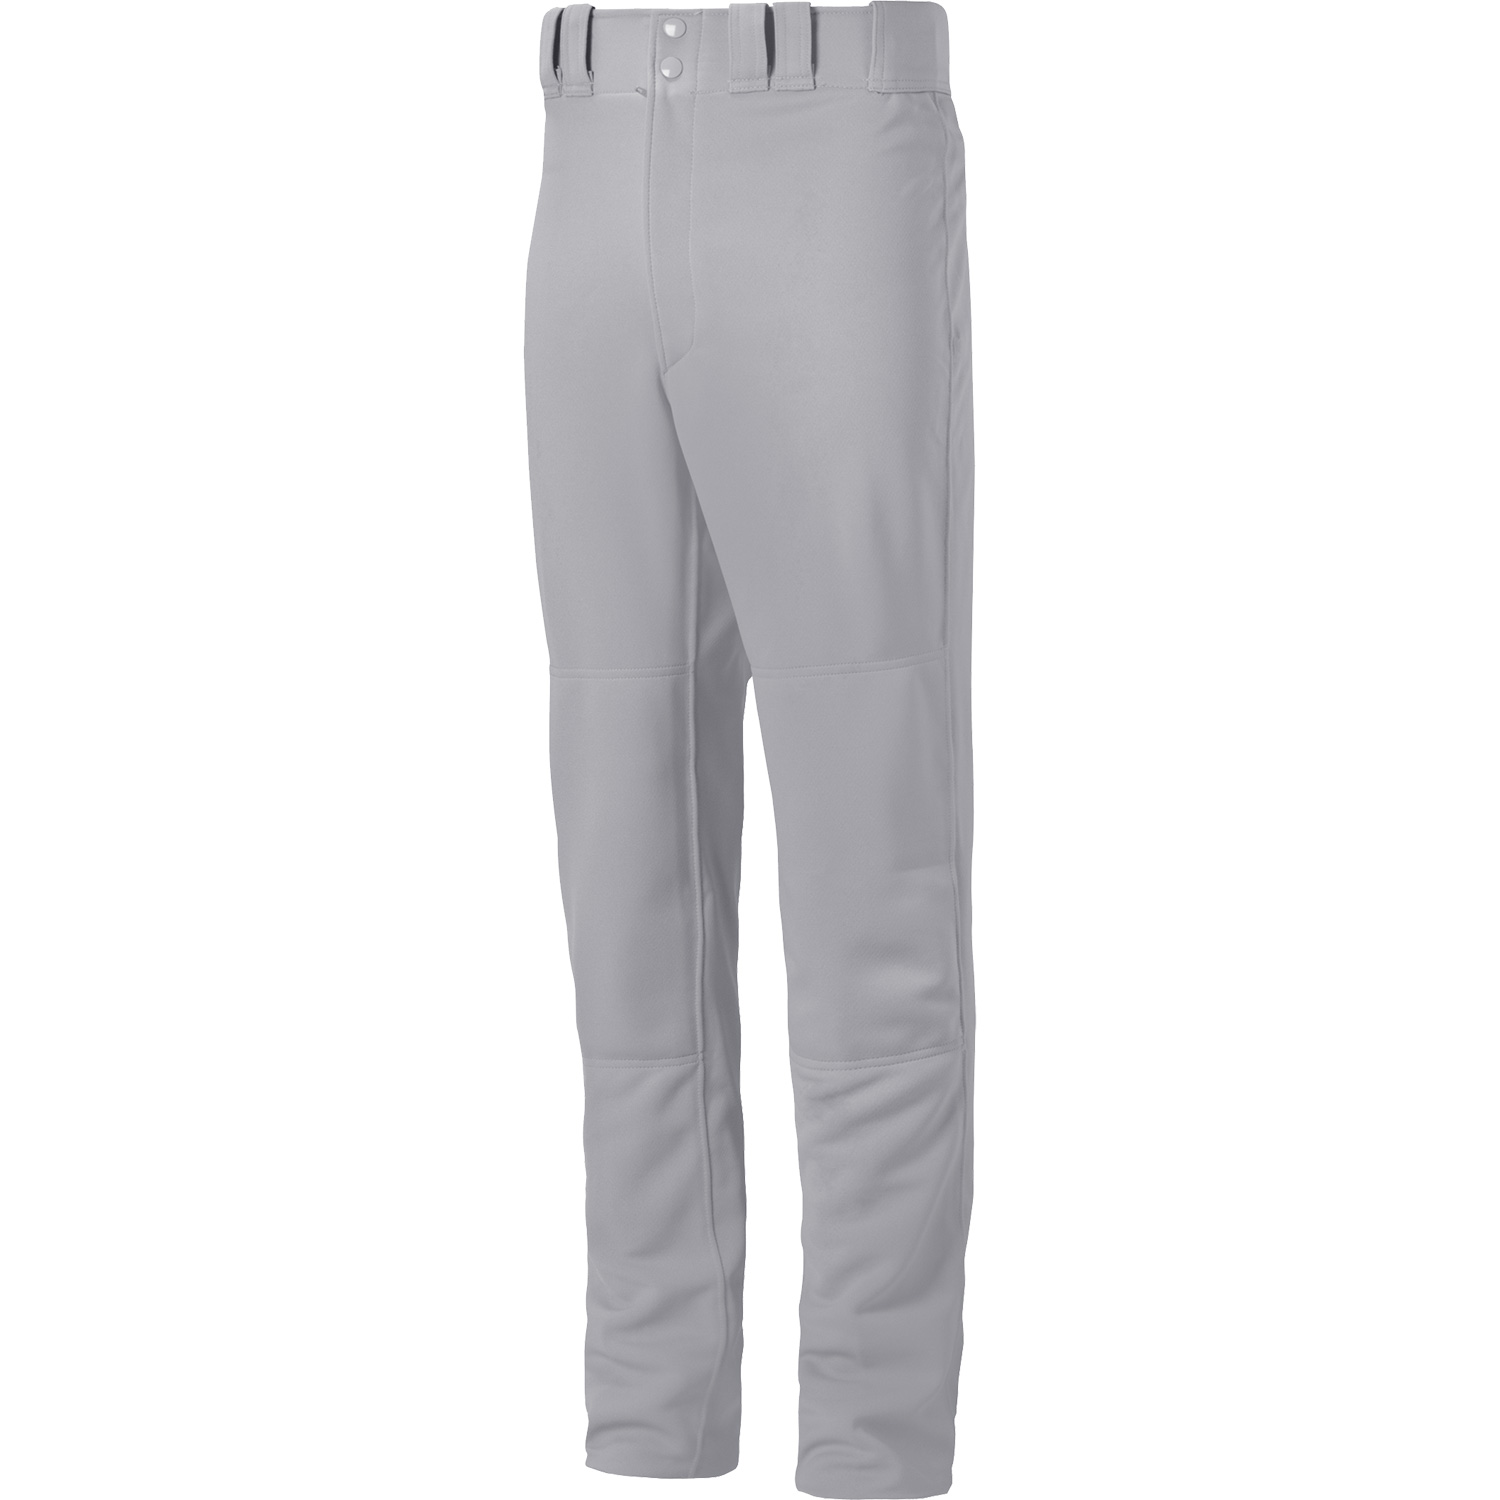 Mizuno Mens Adult Baseball Pants Grey Snaps Button Elastic Bottom Size XS XSmall 